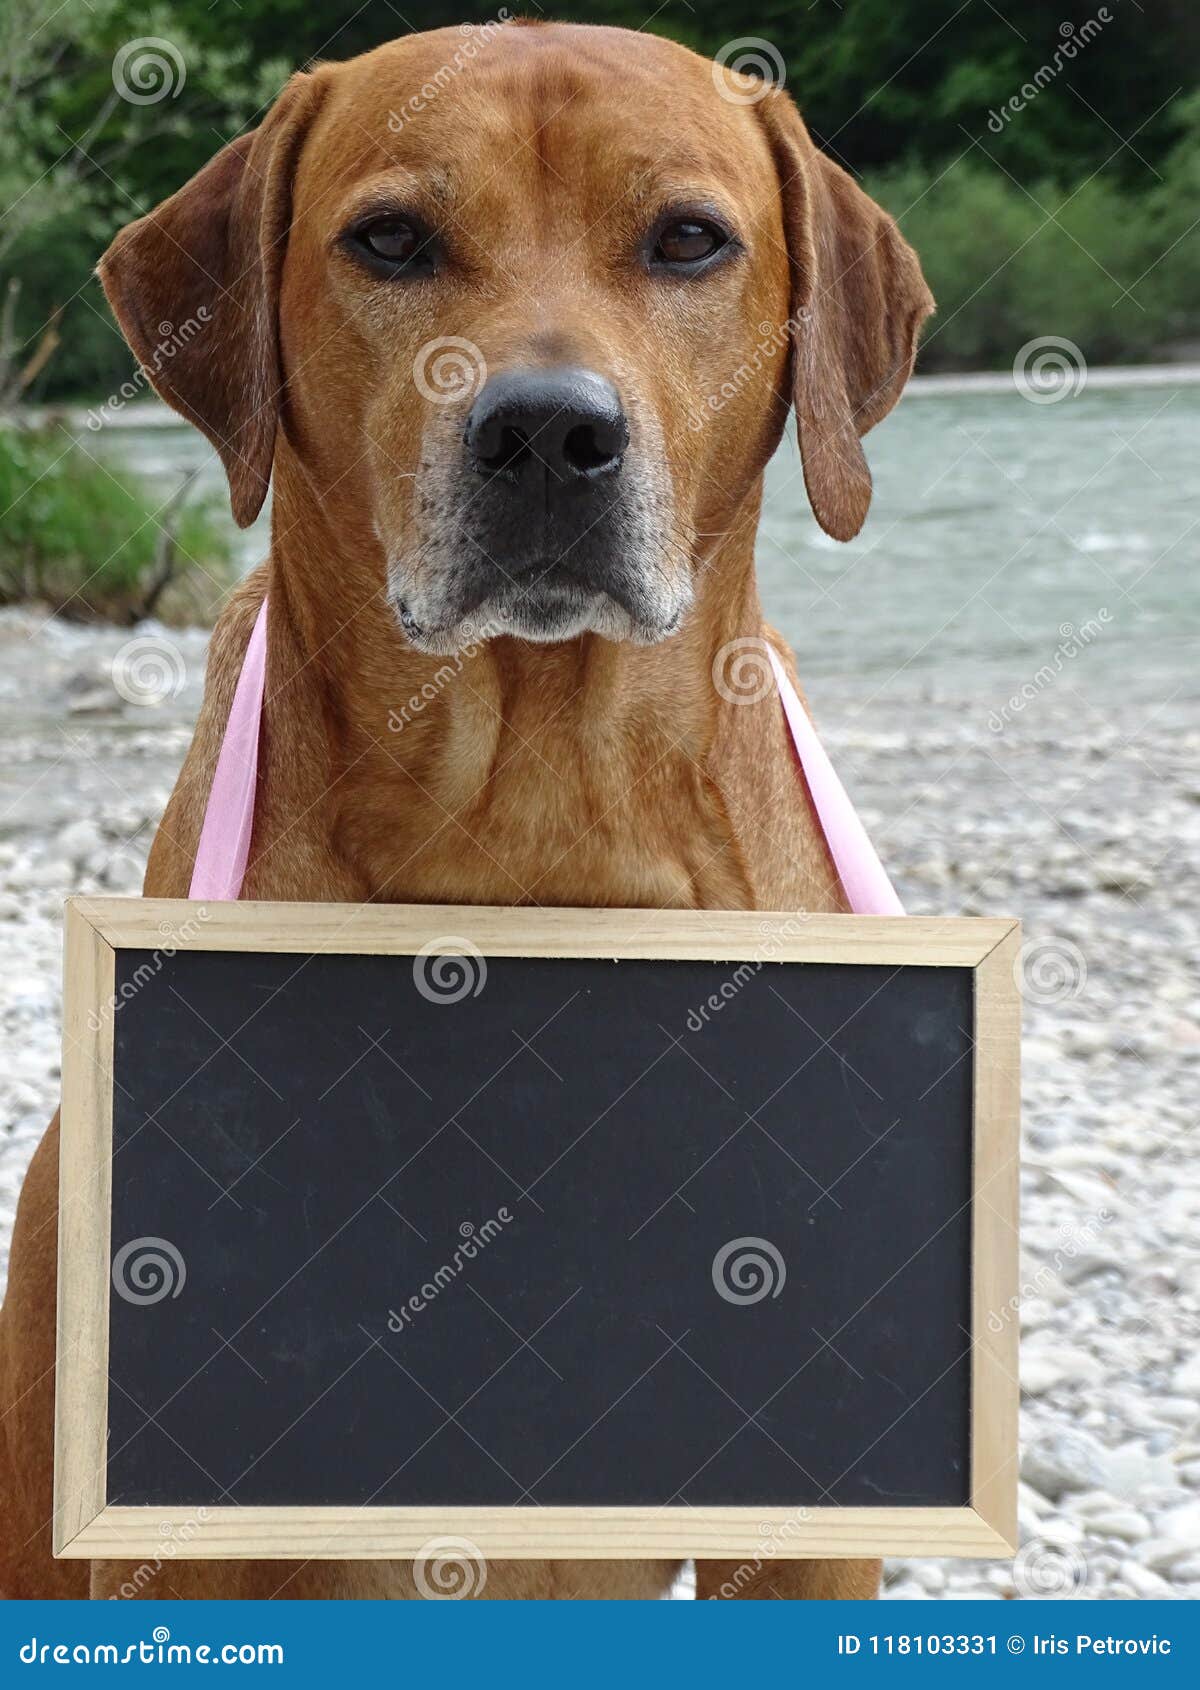 dog rhodesian ridgeback and chalkboard in nature